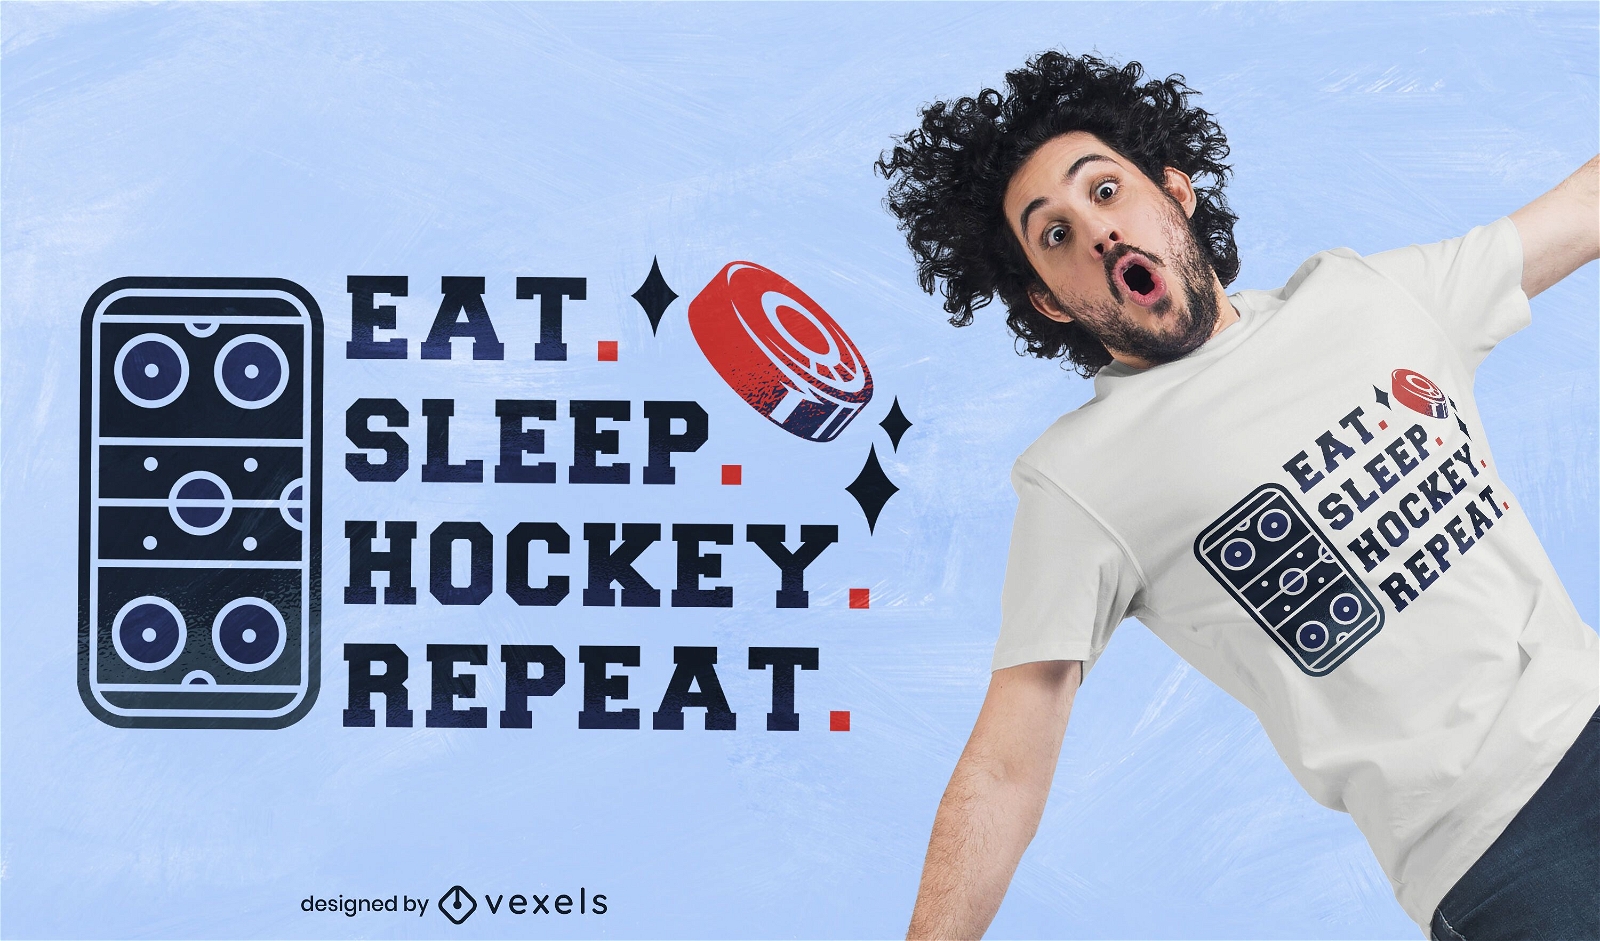 Eat sleep hockey repeat t-shirt design